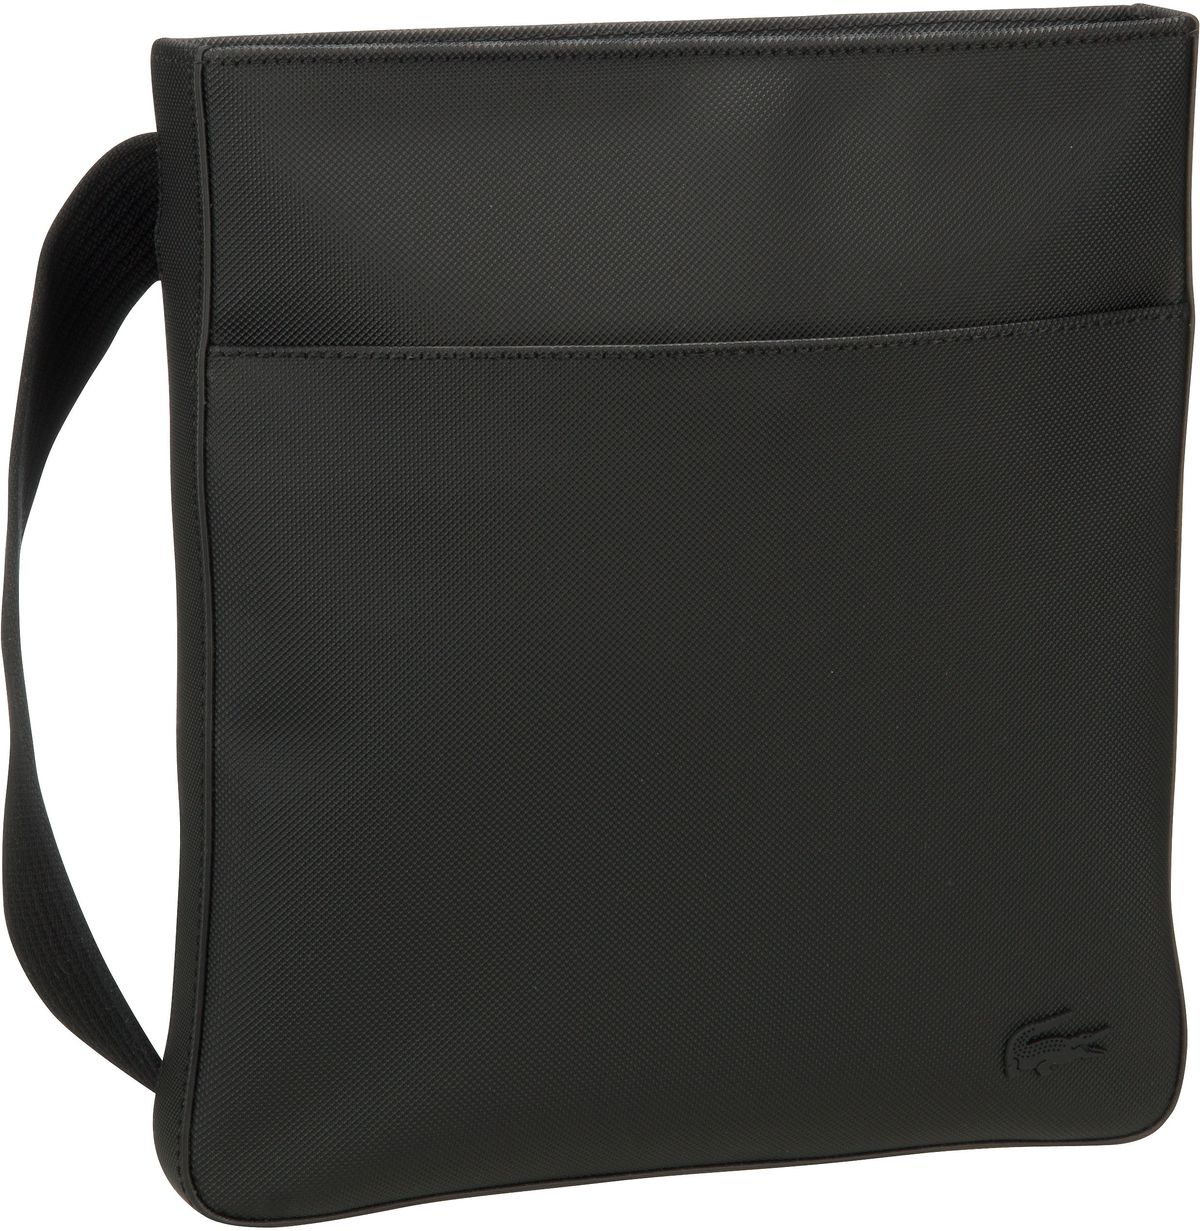 Lacoste Men's Classic Crossover Bag 2850 - Black